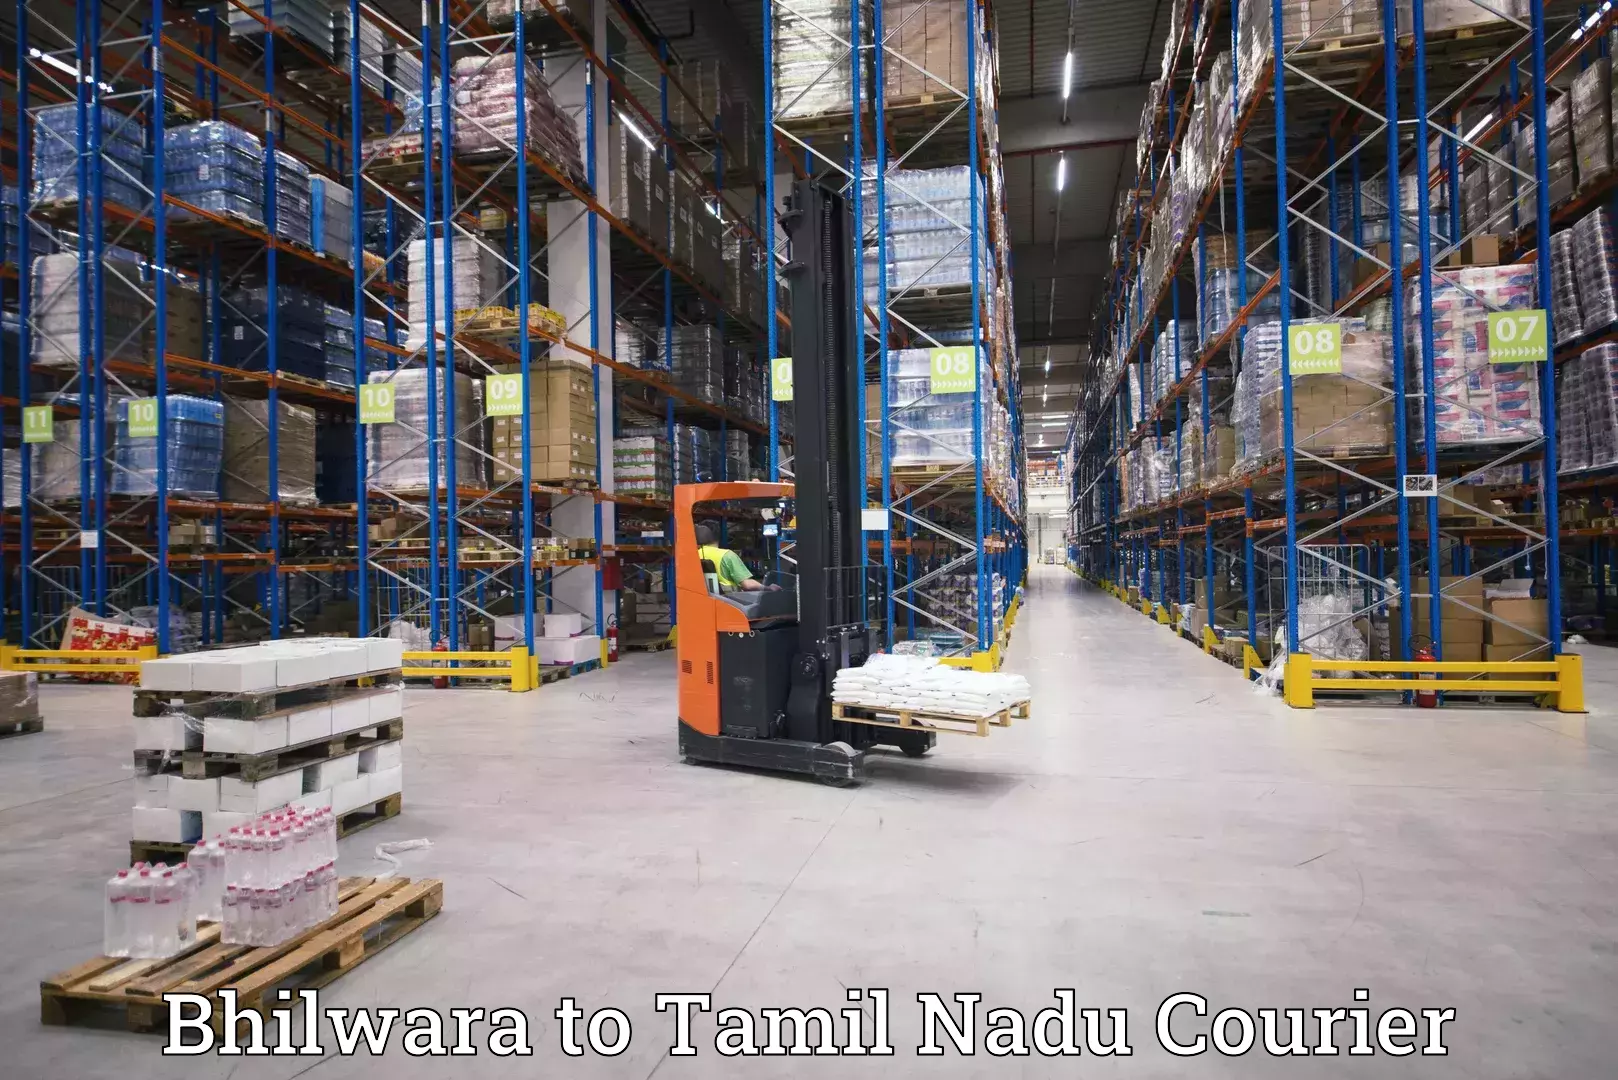 Efficient order fulfillment Bhilwara to Tamil Nadu